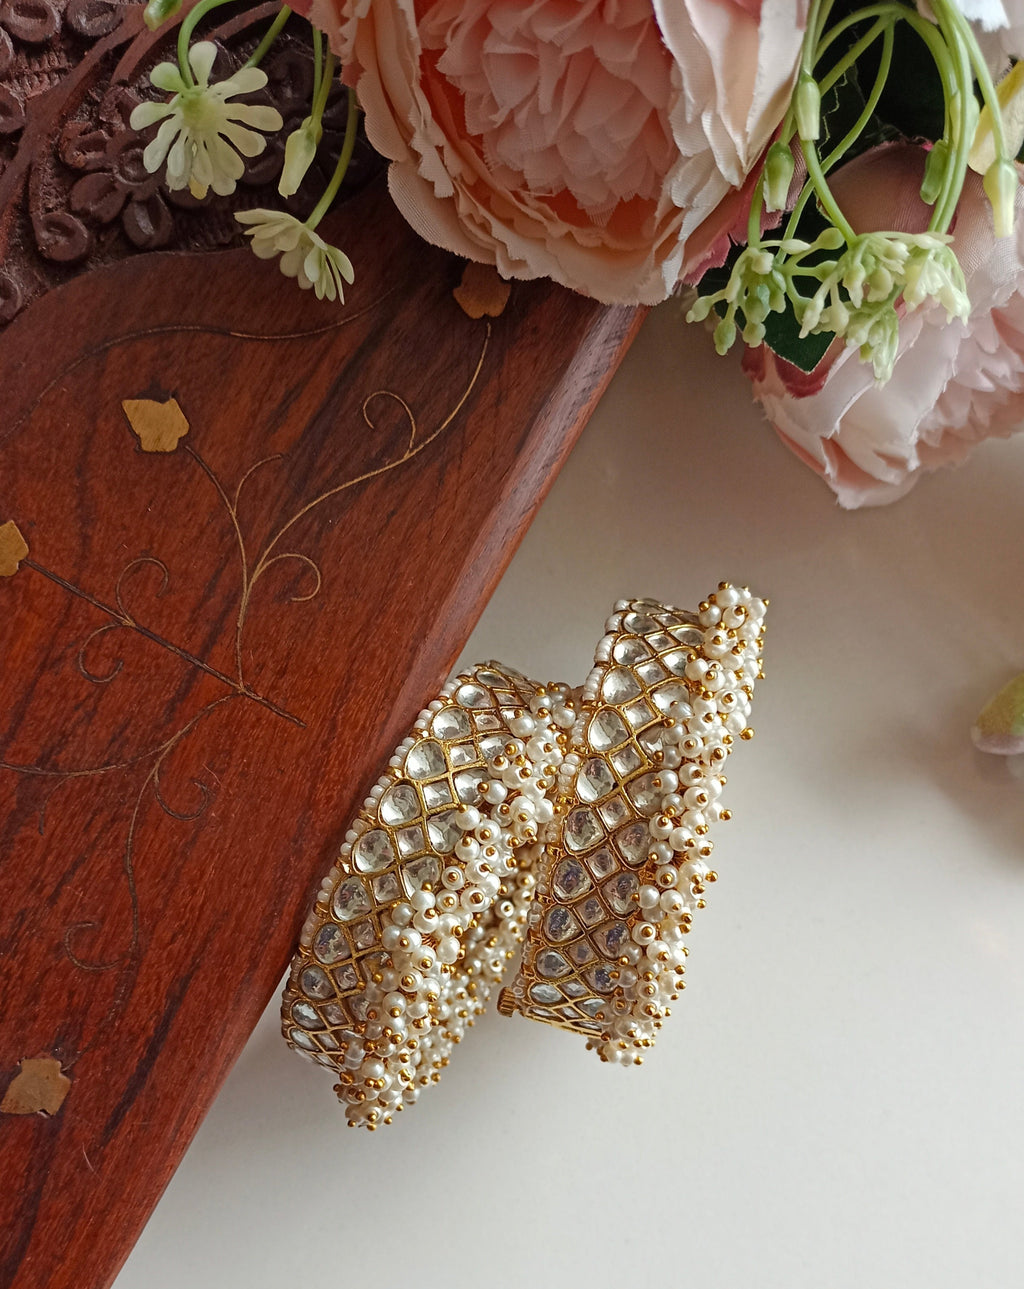 Kundan bangle with pearls detailing